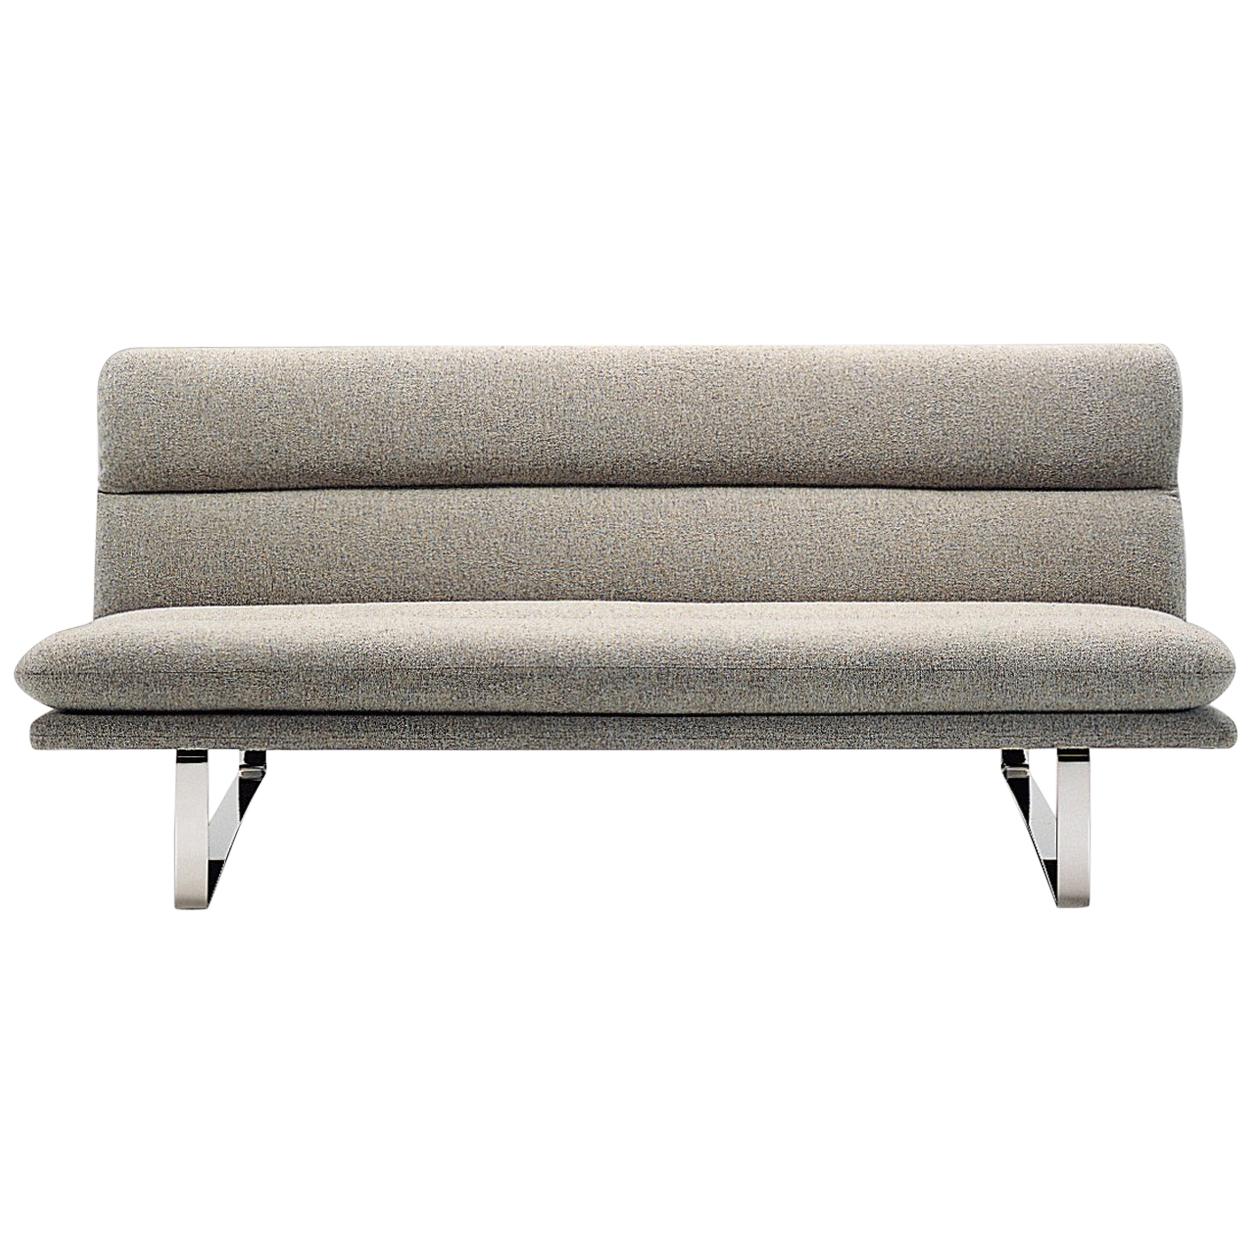 Anpassbares Artifort-Sofa C683  von Kho Liang Le